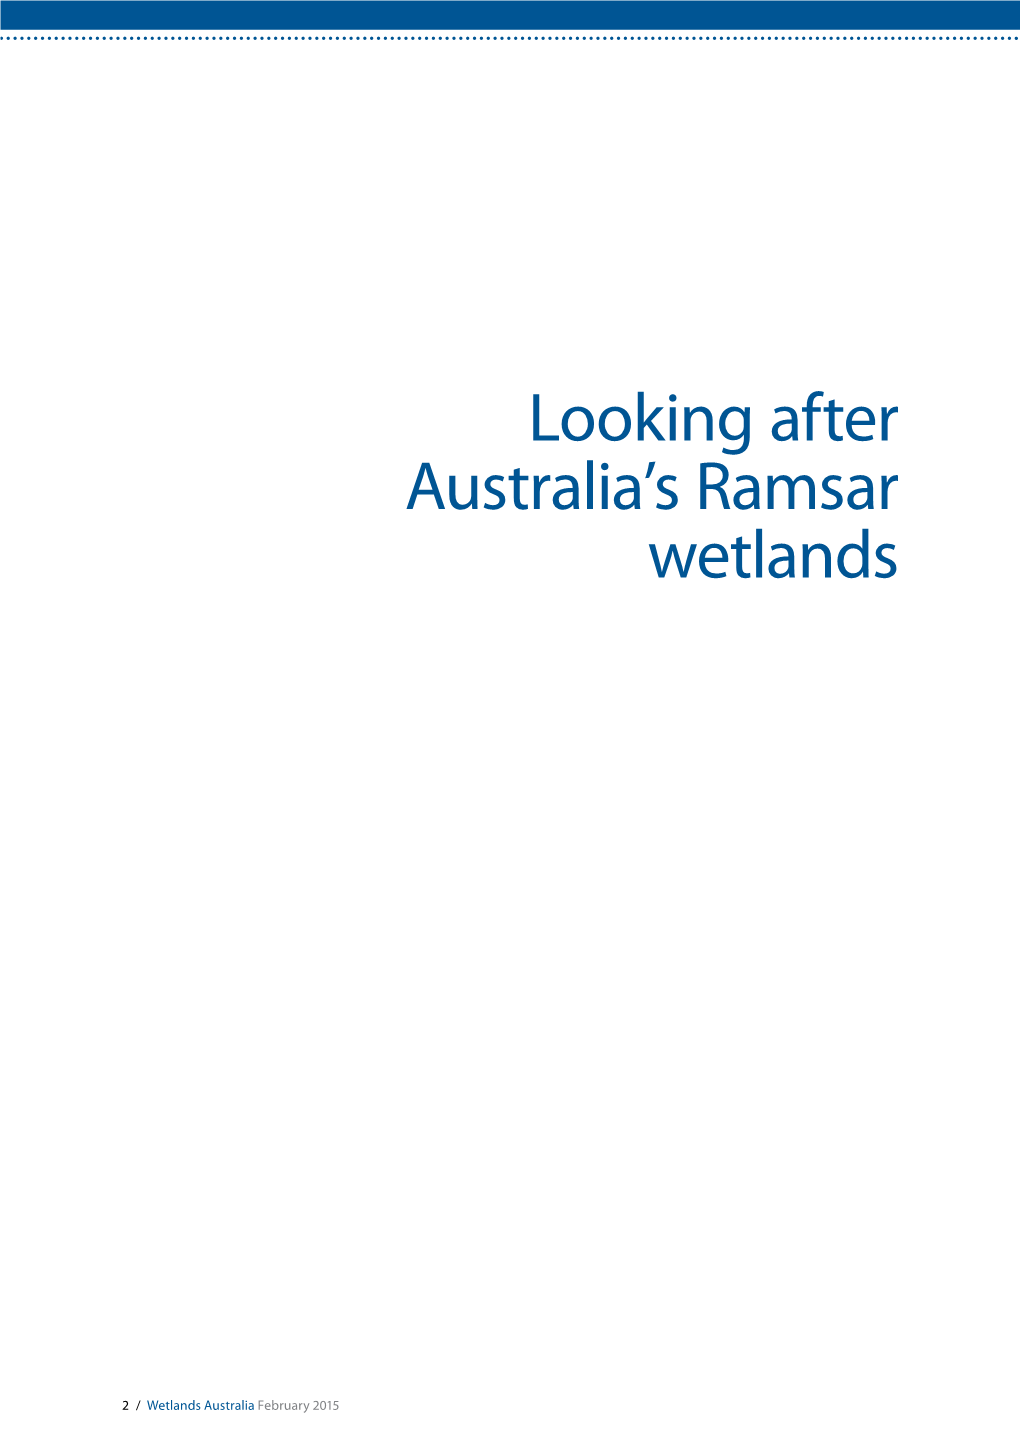 Looking After Australia's Ramsar Wetlands (PDF